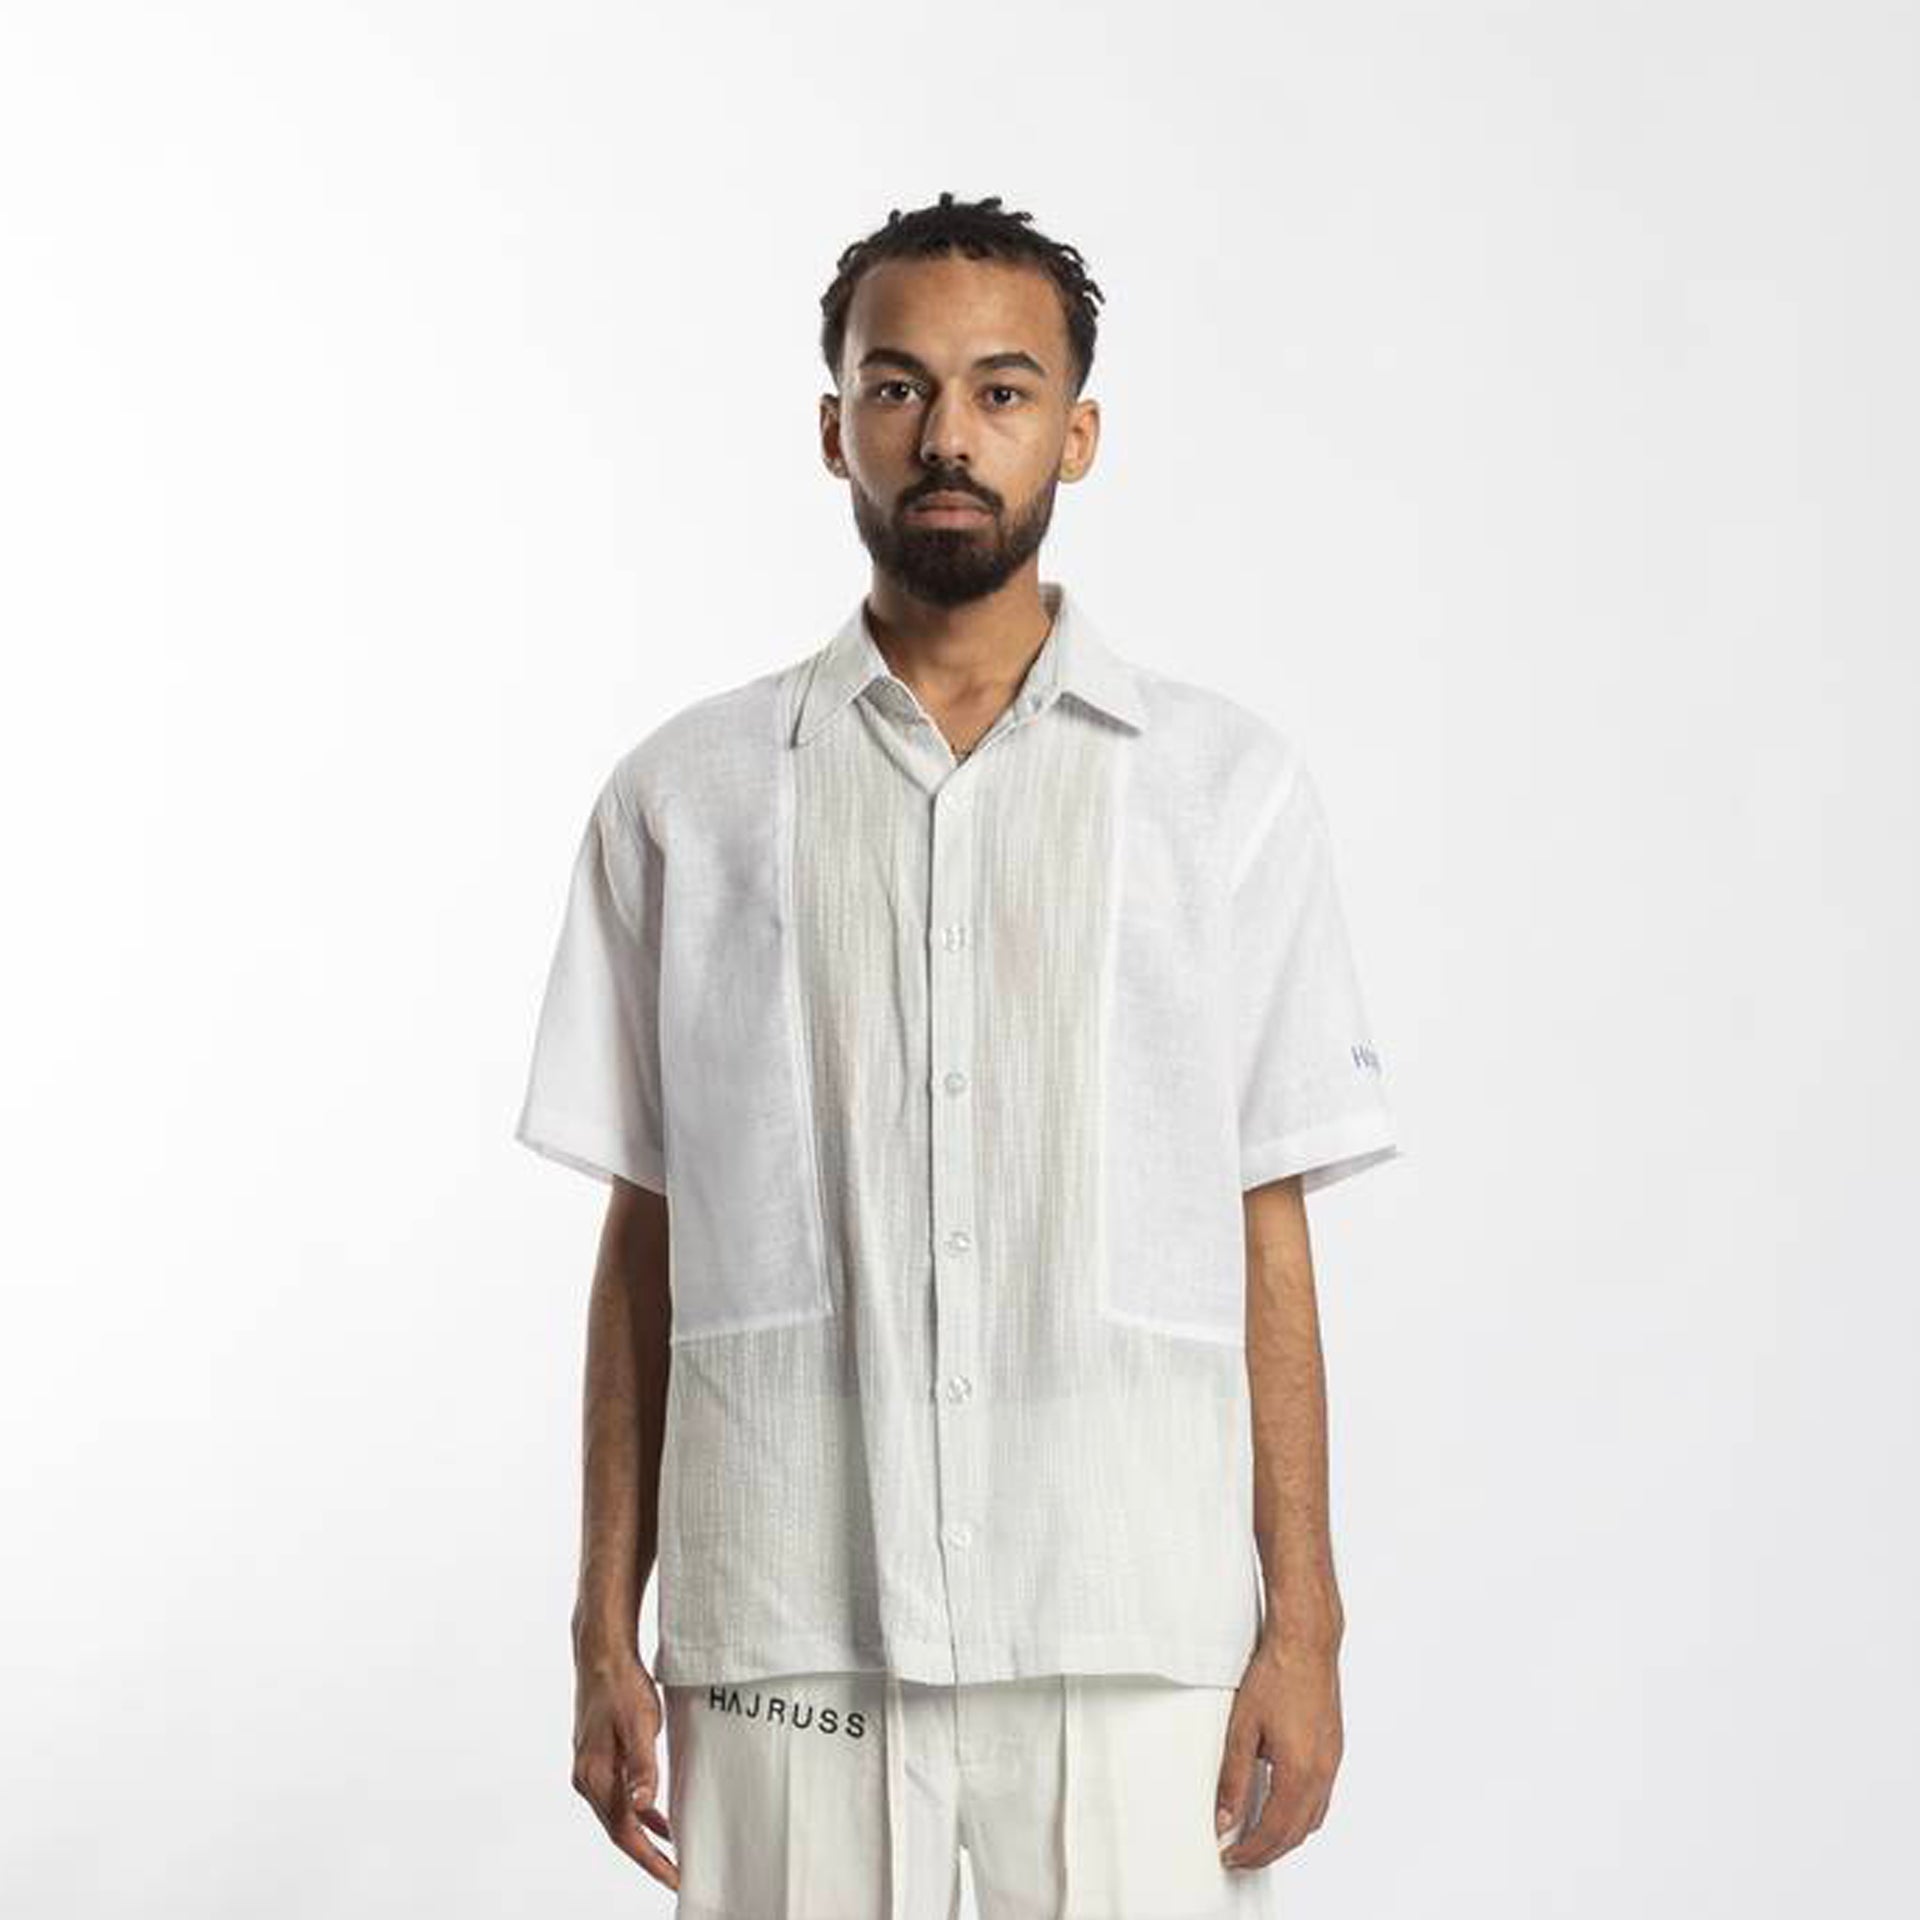 Mandarin Squares White & Beige Stripes Short-Sleeve Shirt From Hajruss